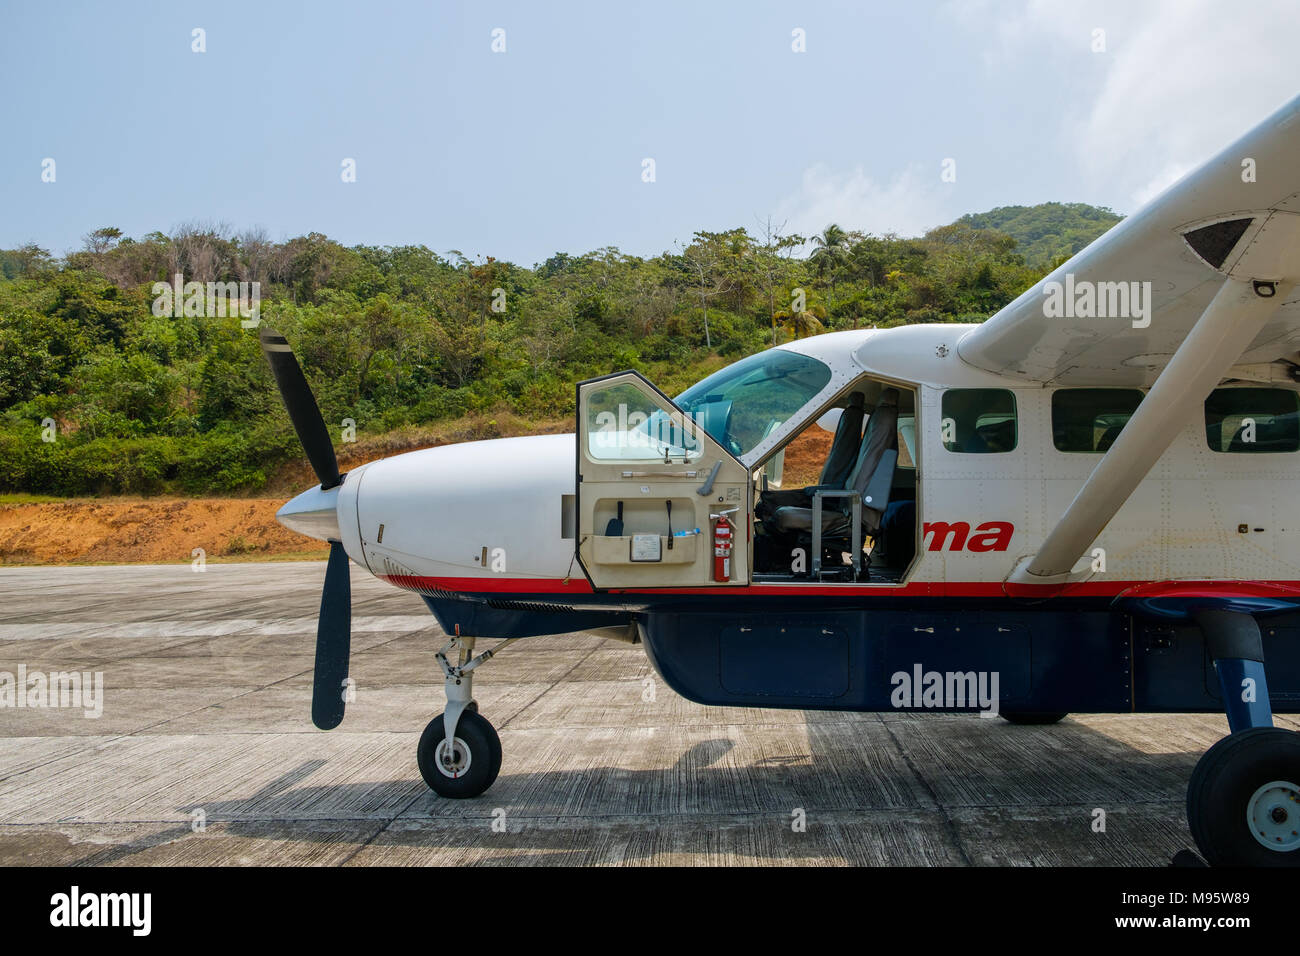 Puerto Marceau, Panama - März 2018: Kleine Cessna 208B propeller Flugzeug von Air Panama mit offenem Cockpit Tür Stockfoto